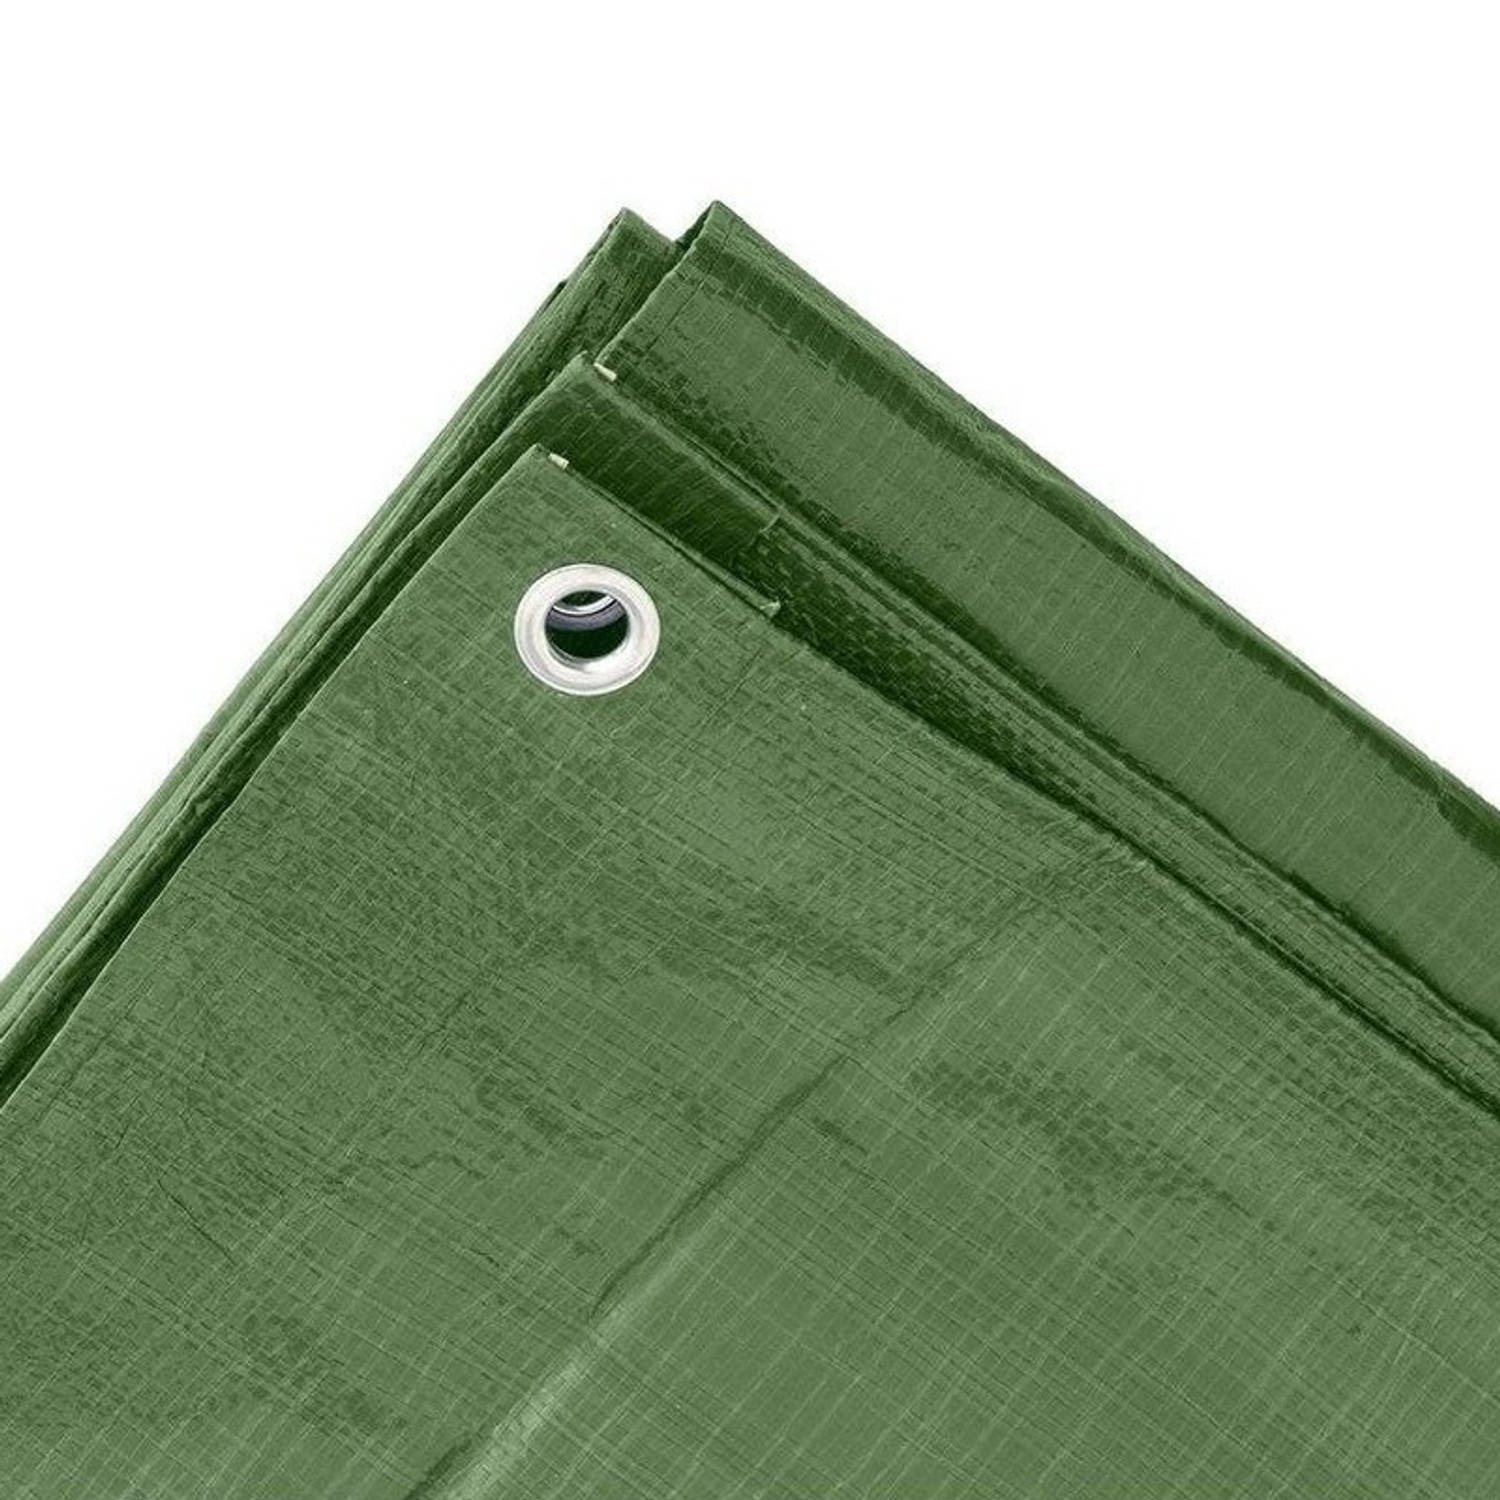 2x Hoge kwaliteit afdekzeilen / dekzeilen groen 2 x 3 meter - Afdekzeilen